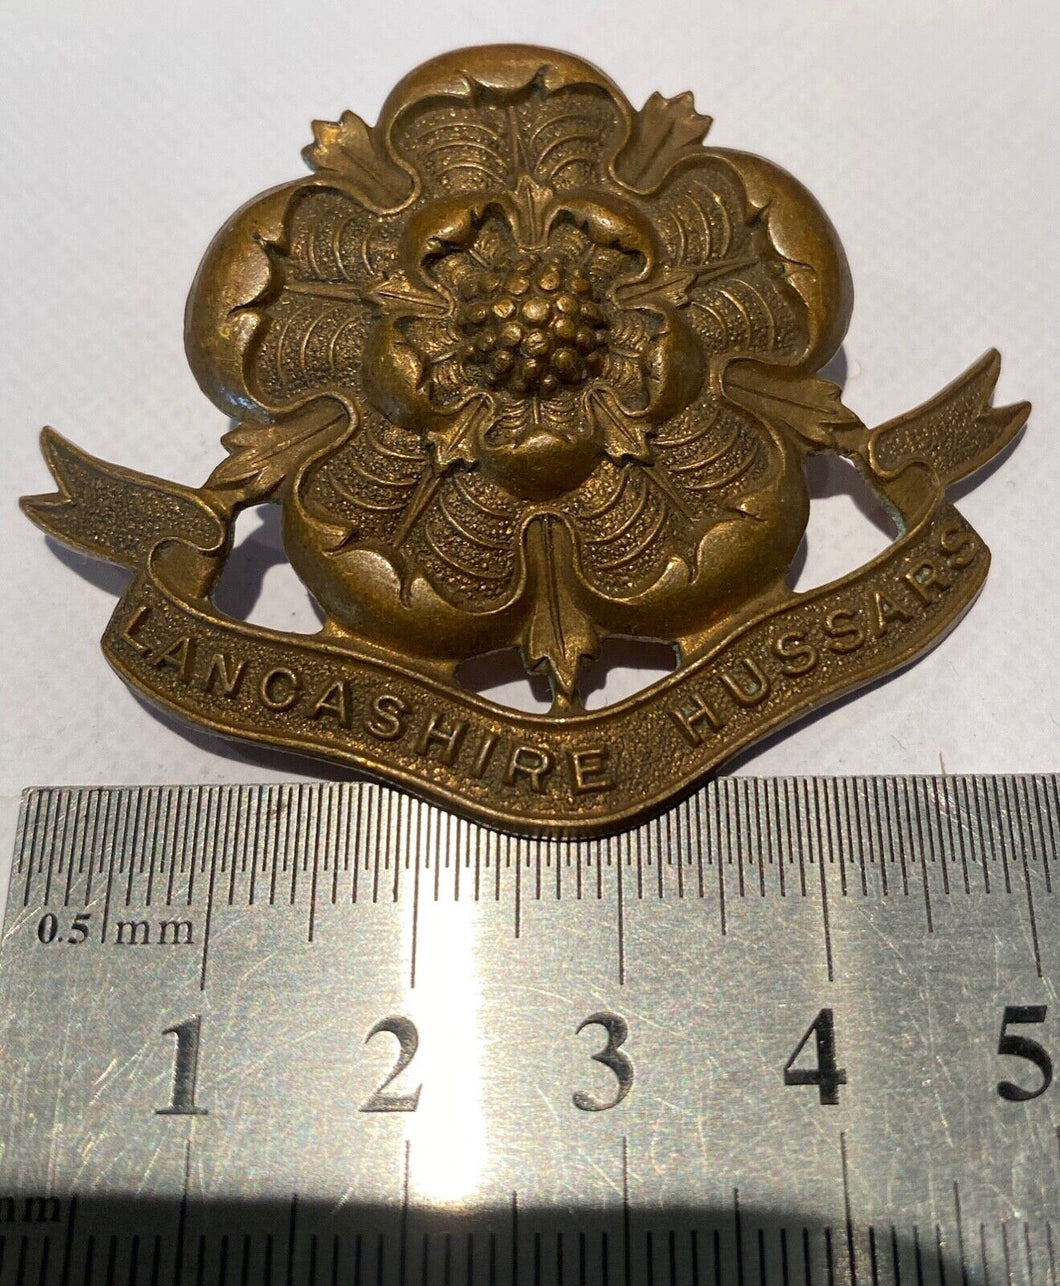 A British Army - LANCASHIRE HUSSARS brass cap badge - - - - - B21